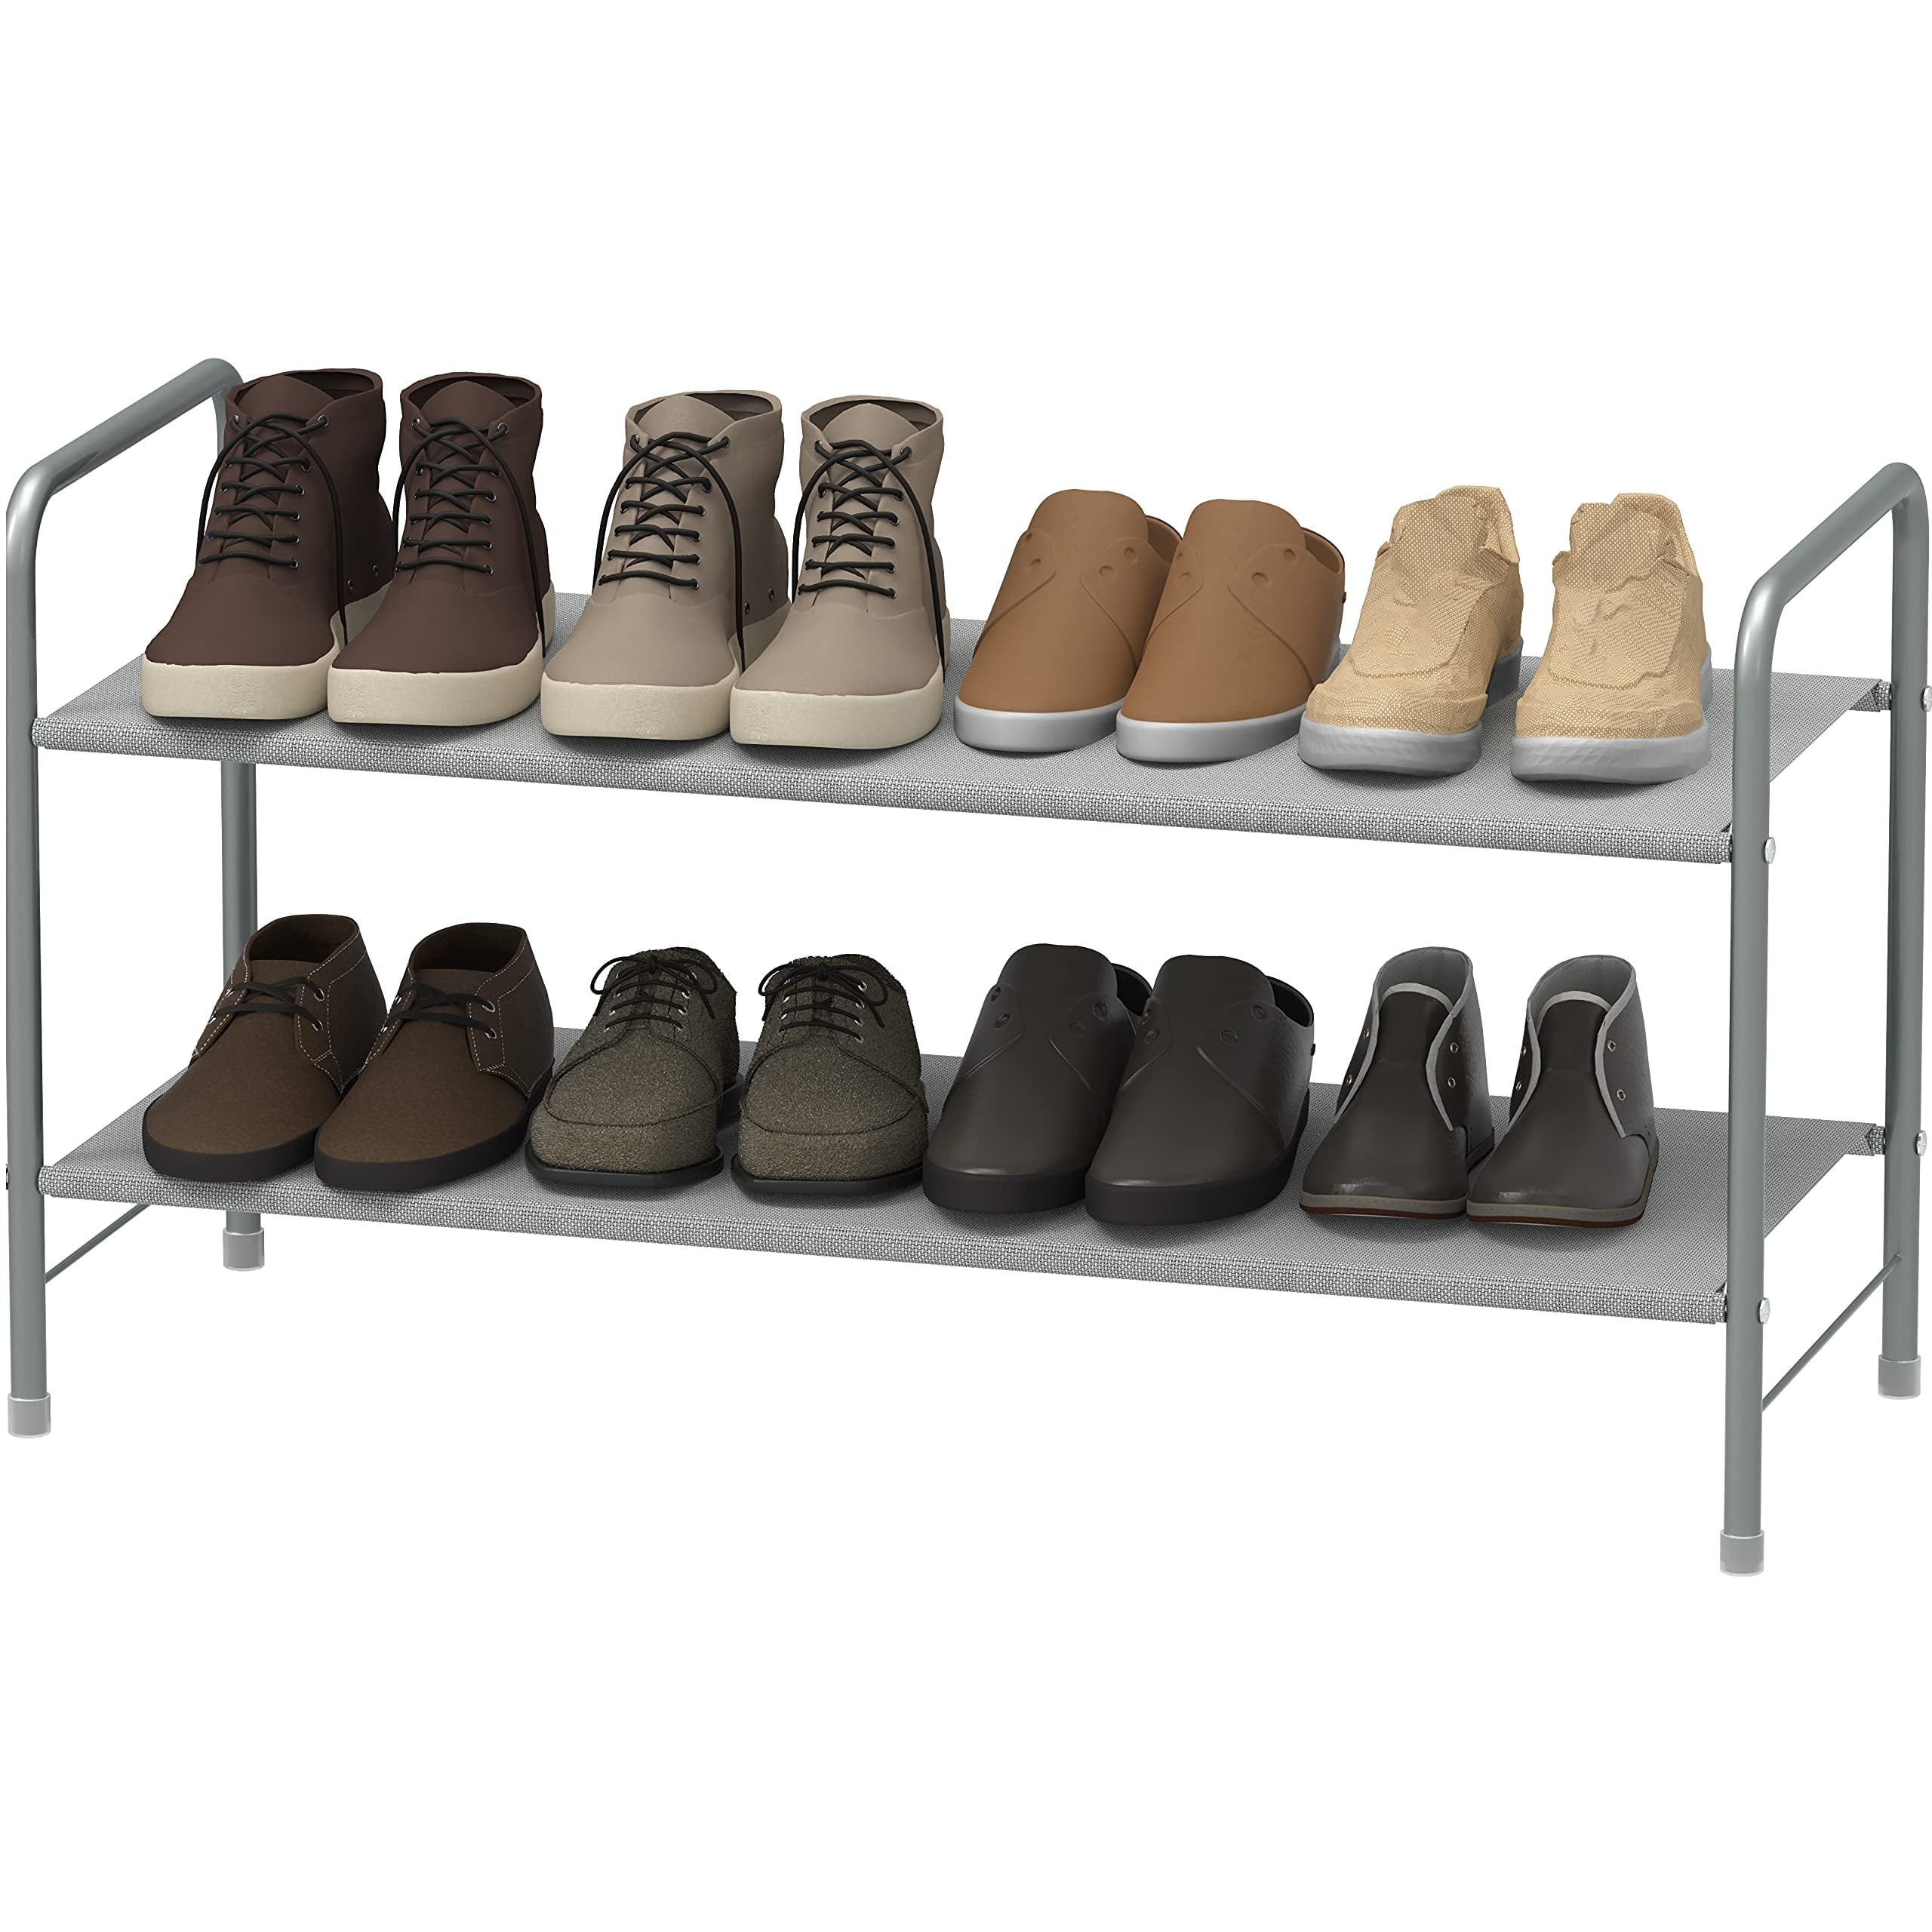 SimpleHouseware 2-Tier Shoe Rack Storage Organizer, Grey